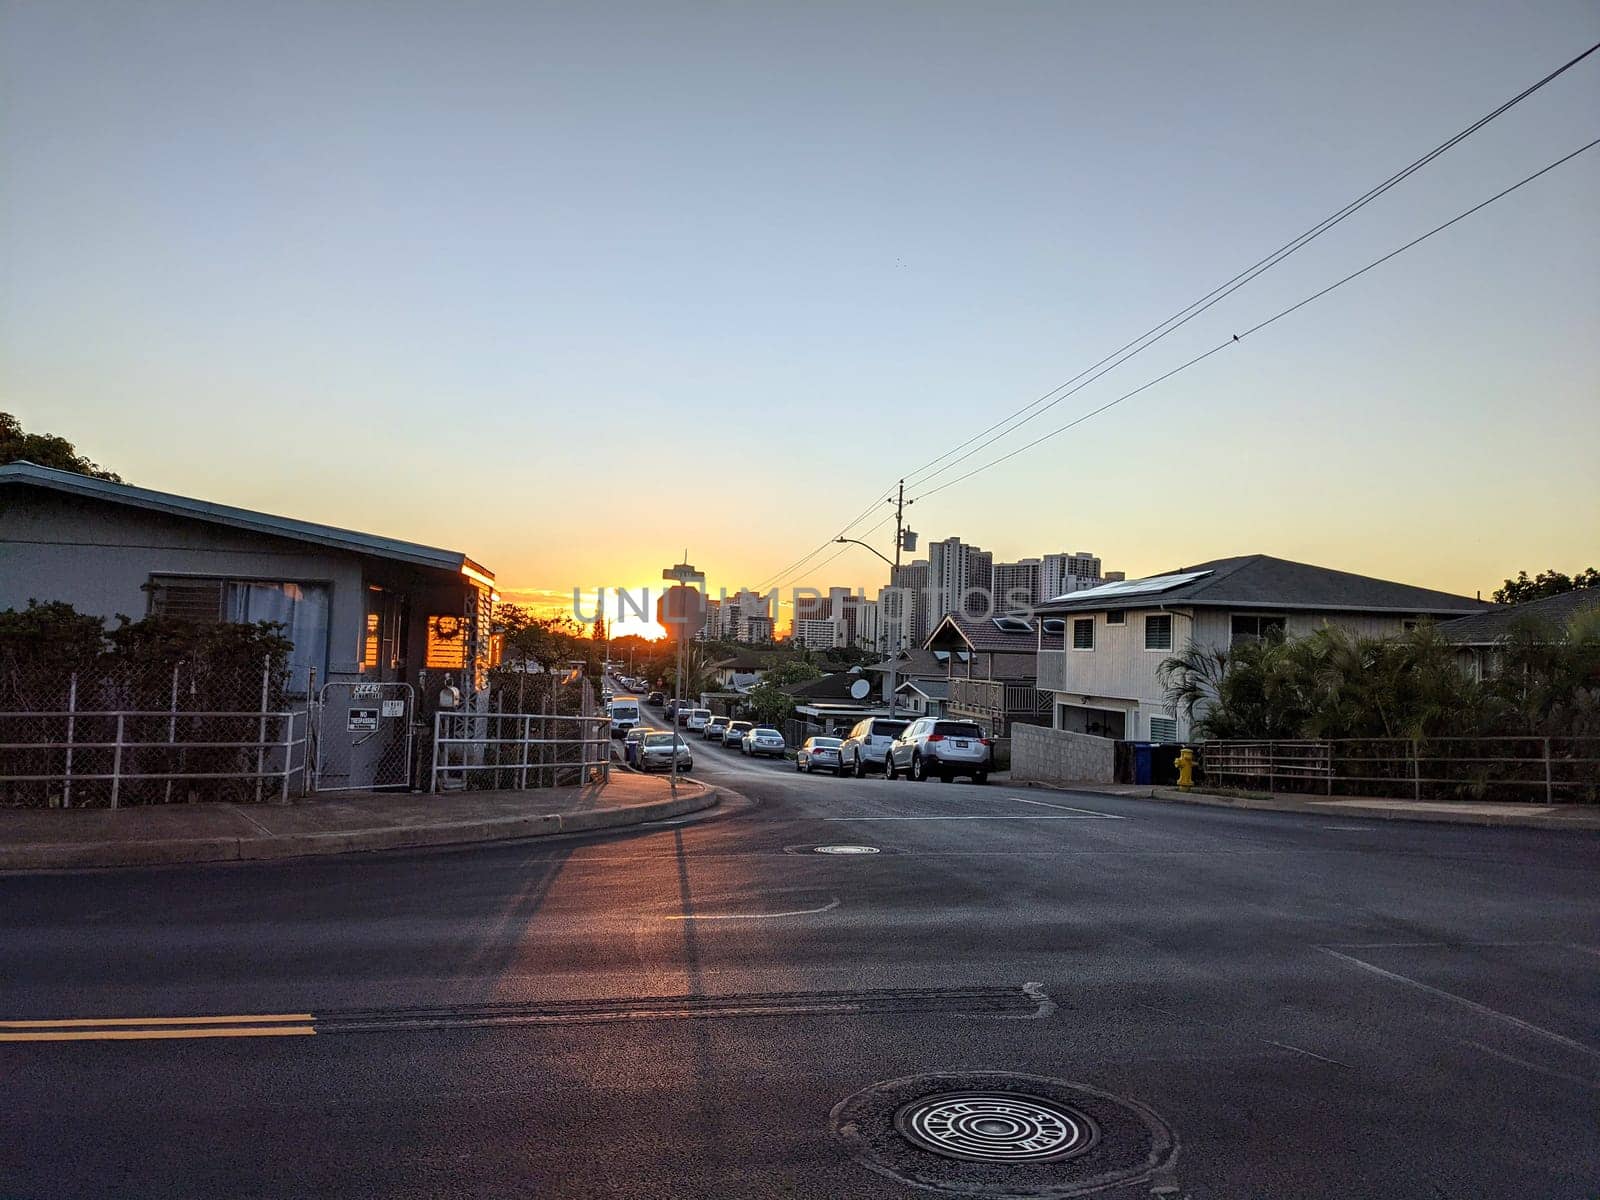 Sunrise over street in Kapahulu by EricGBVD